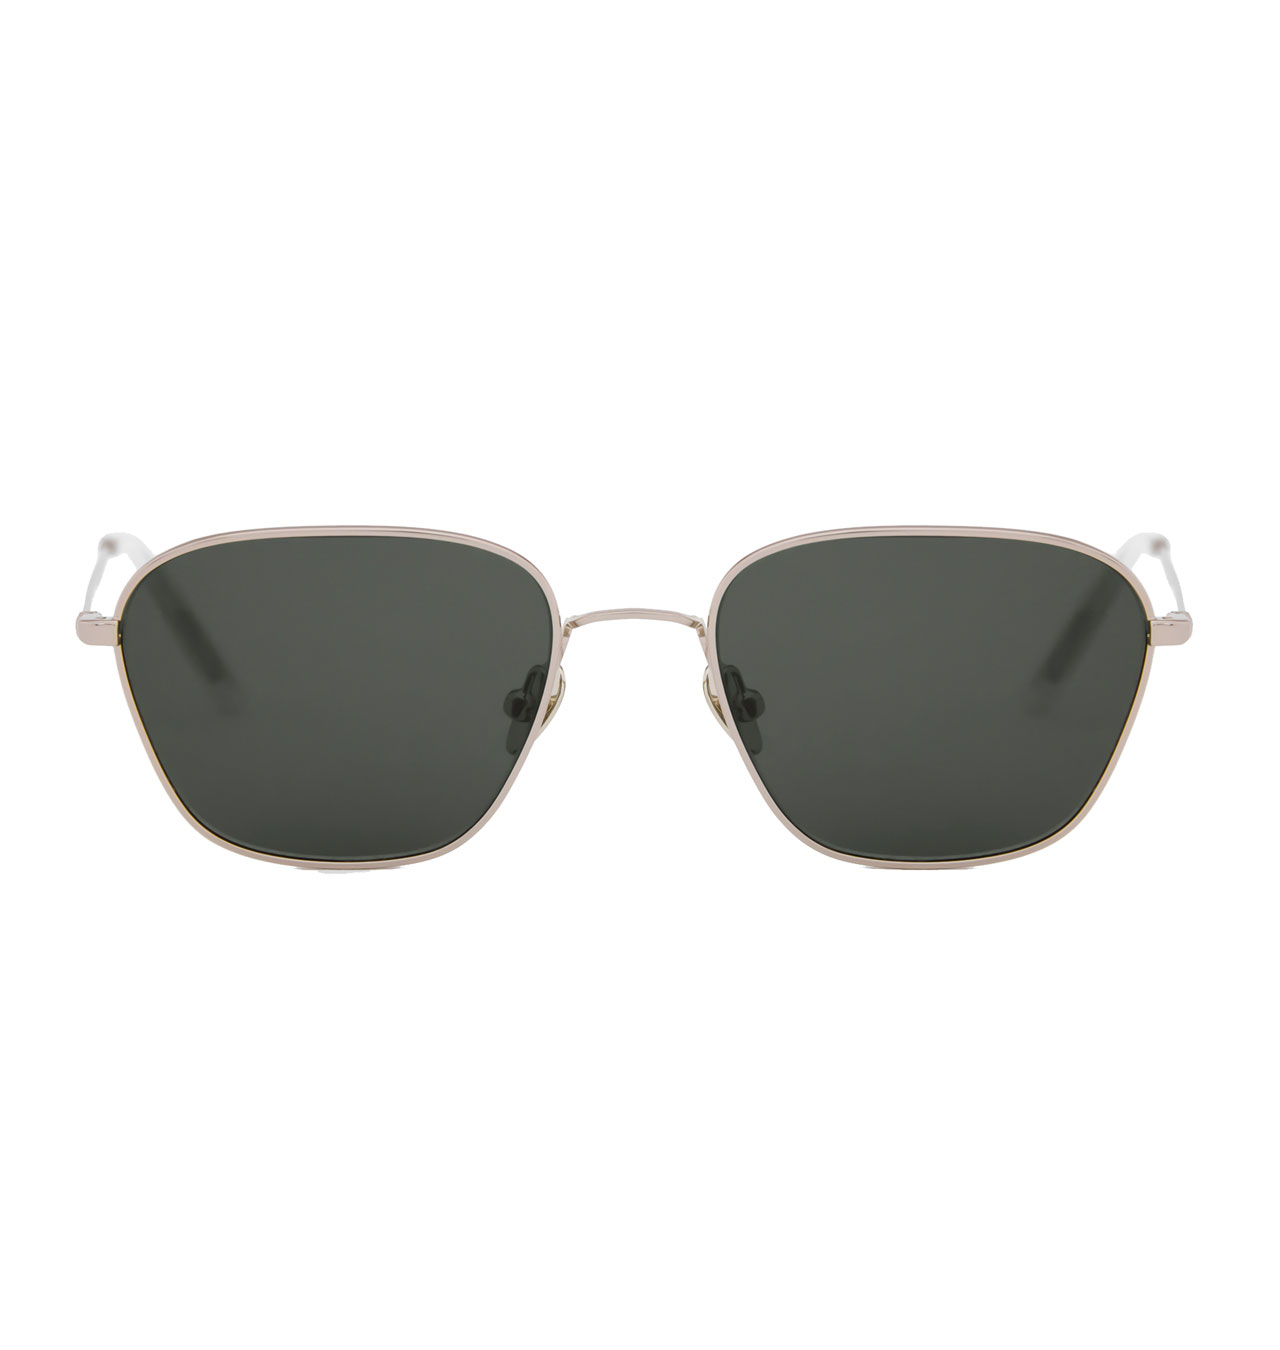 Monokel-Eyewear---Otis-Gold-Sunglasses---Green-Solid-Lens-1